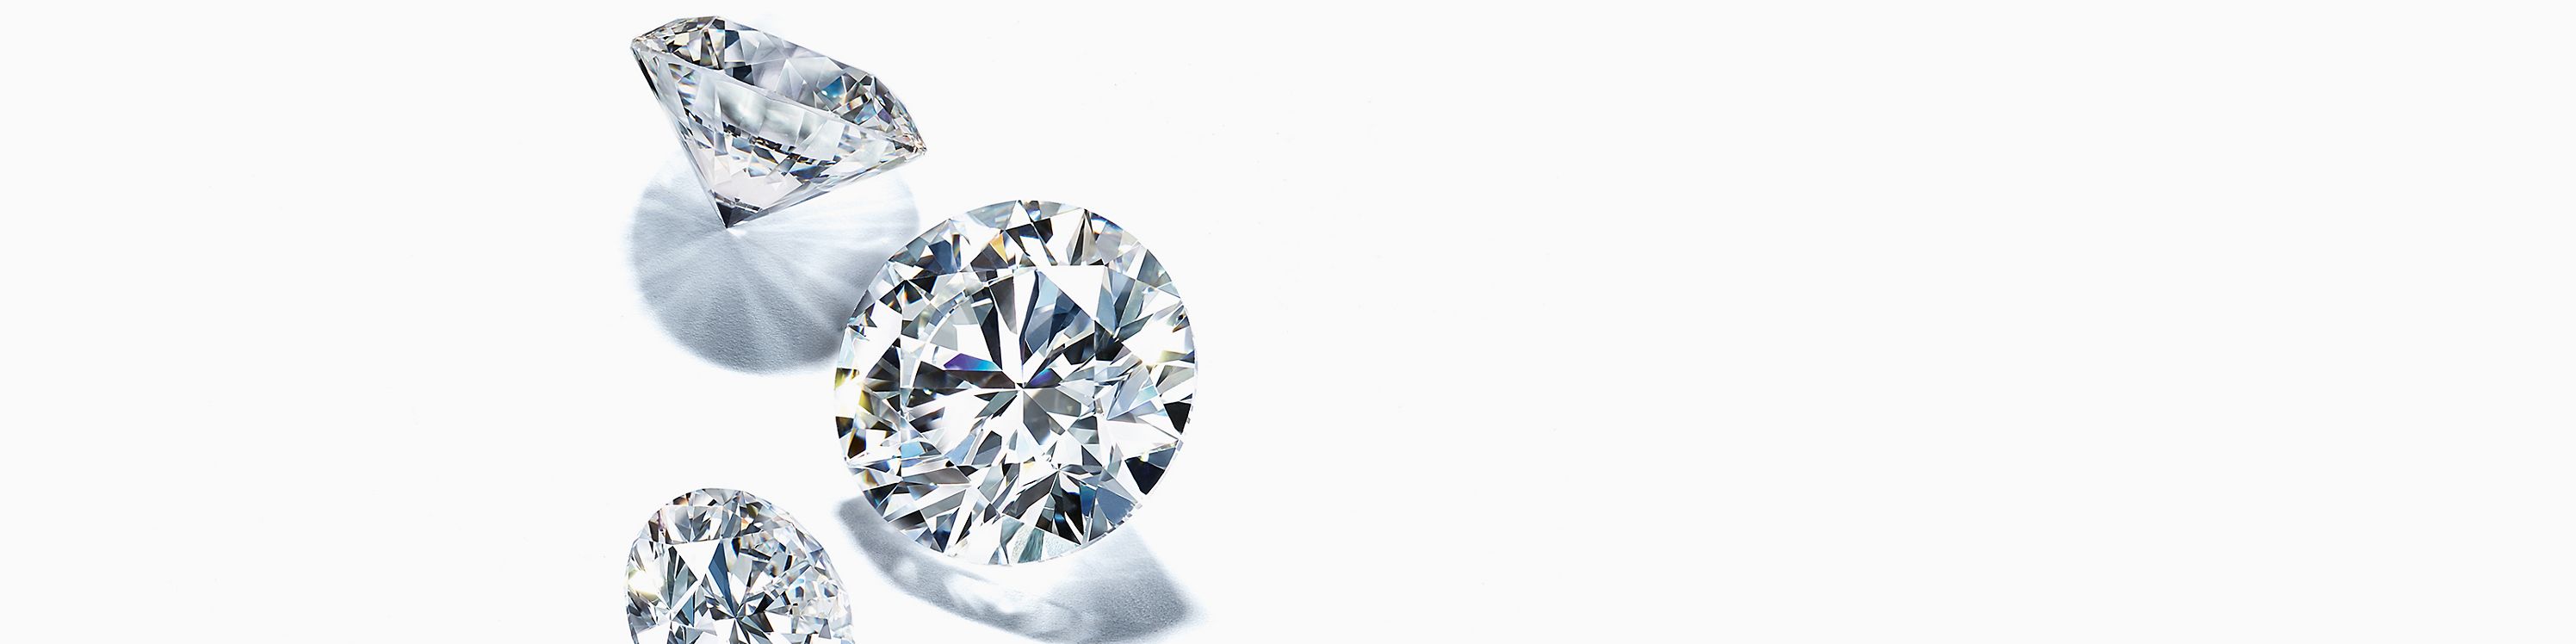 What Diamond Cut Is